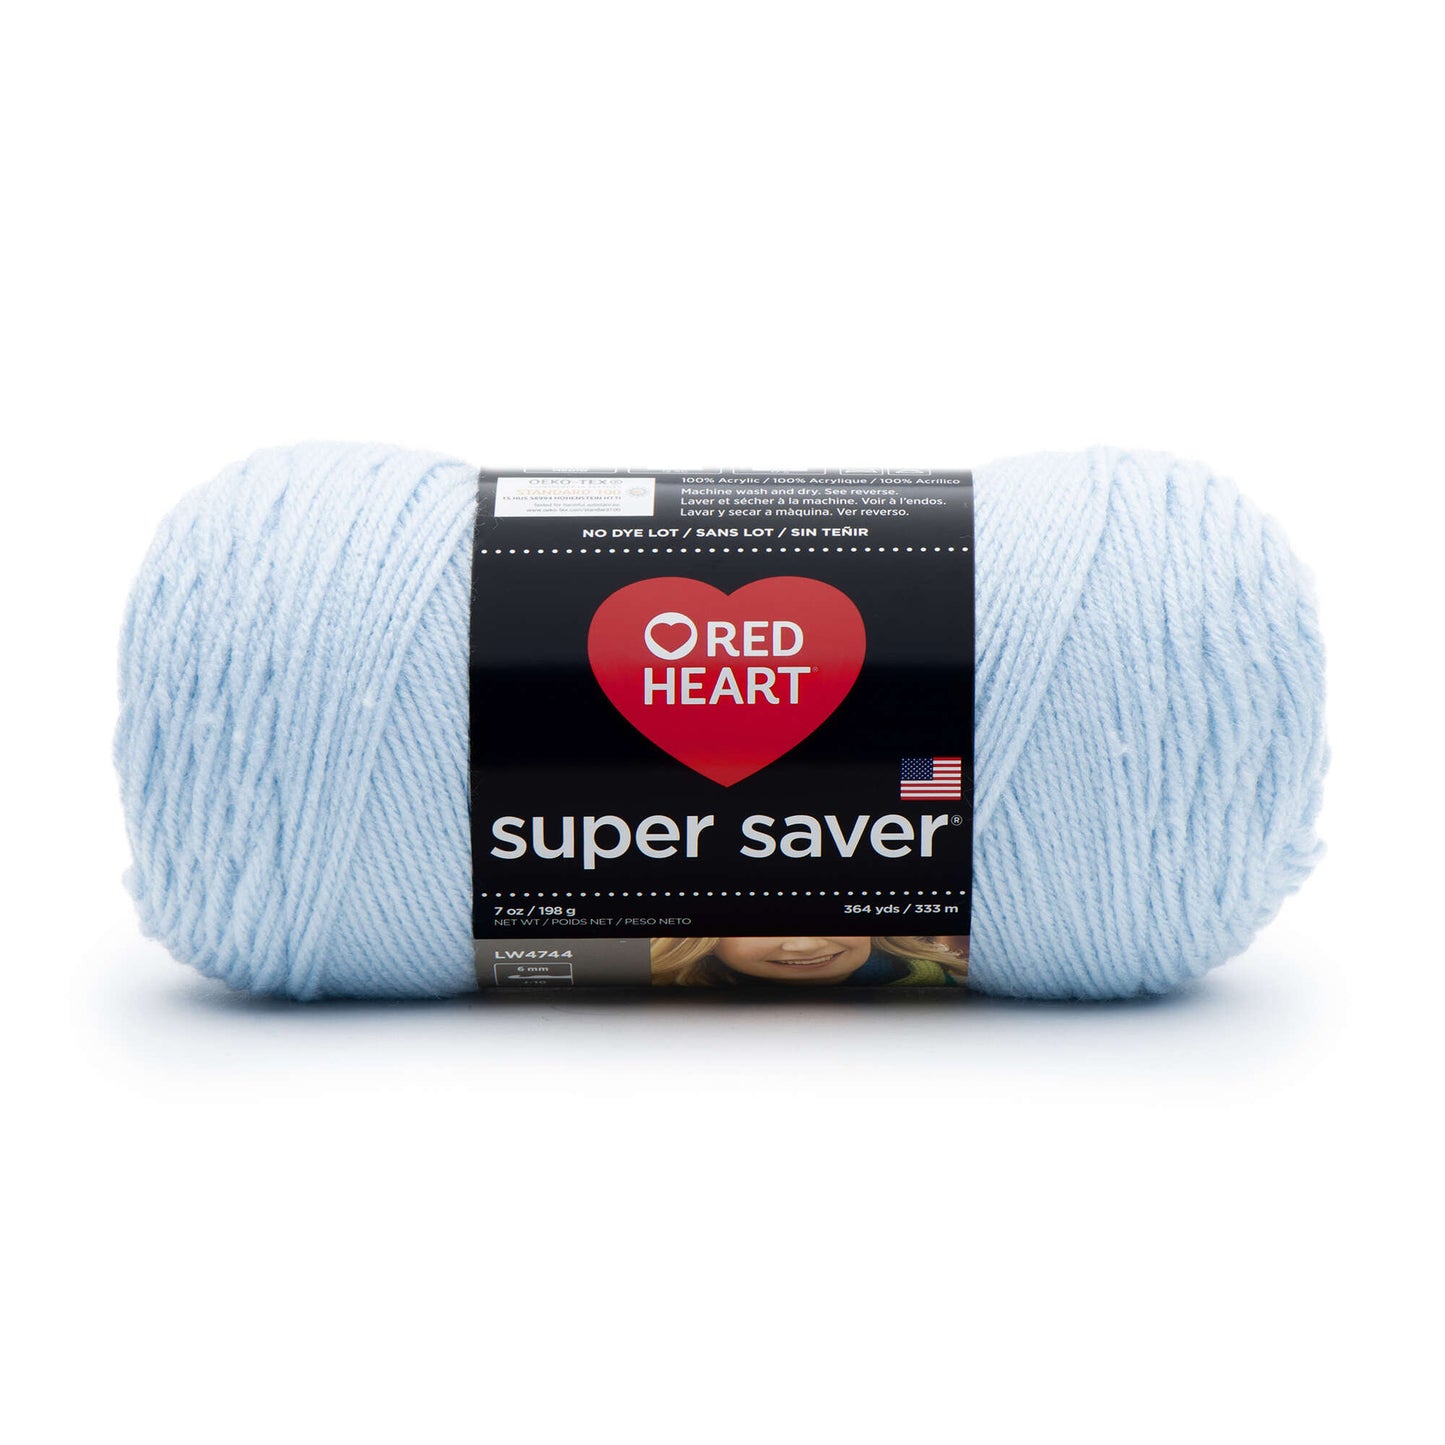 Red Heart Super Saver Yarn - 364 yds